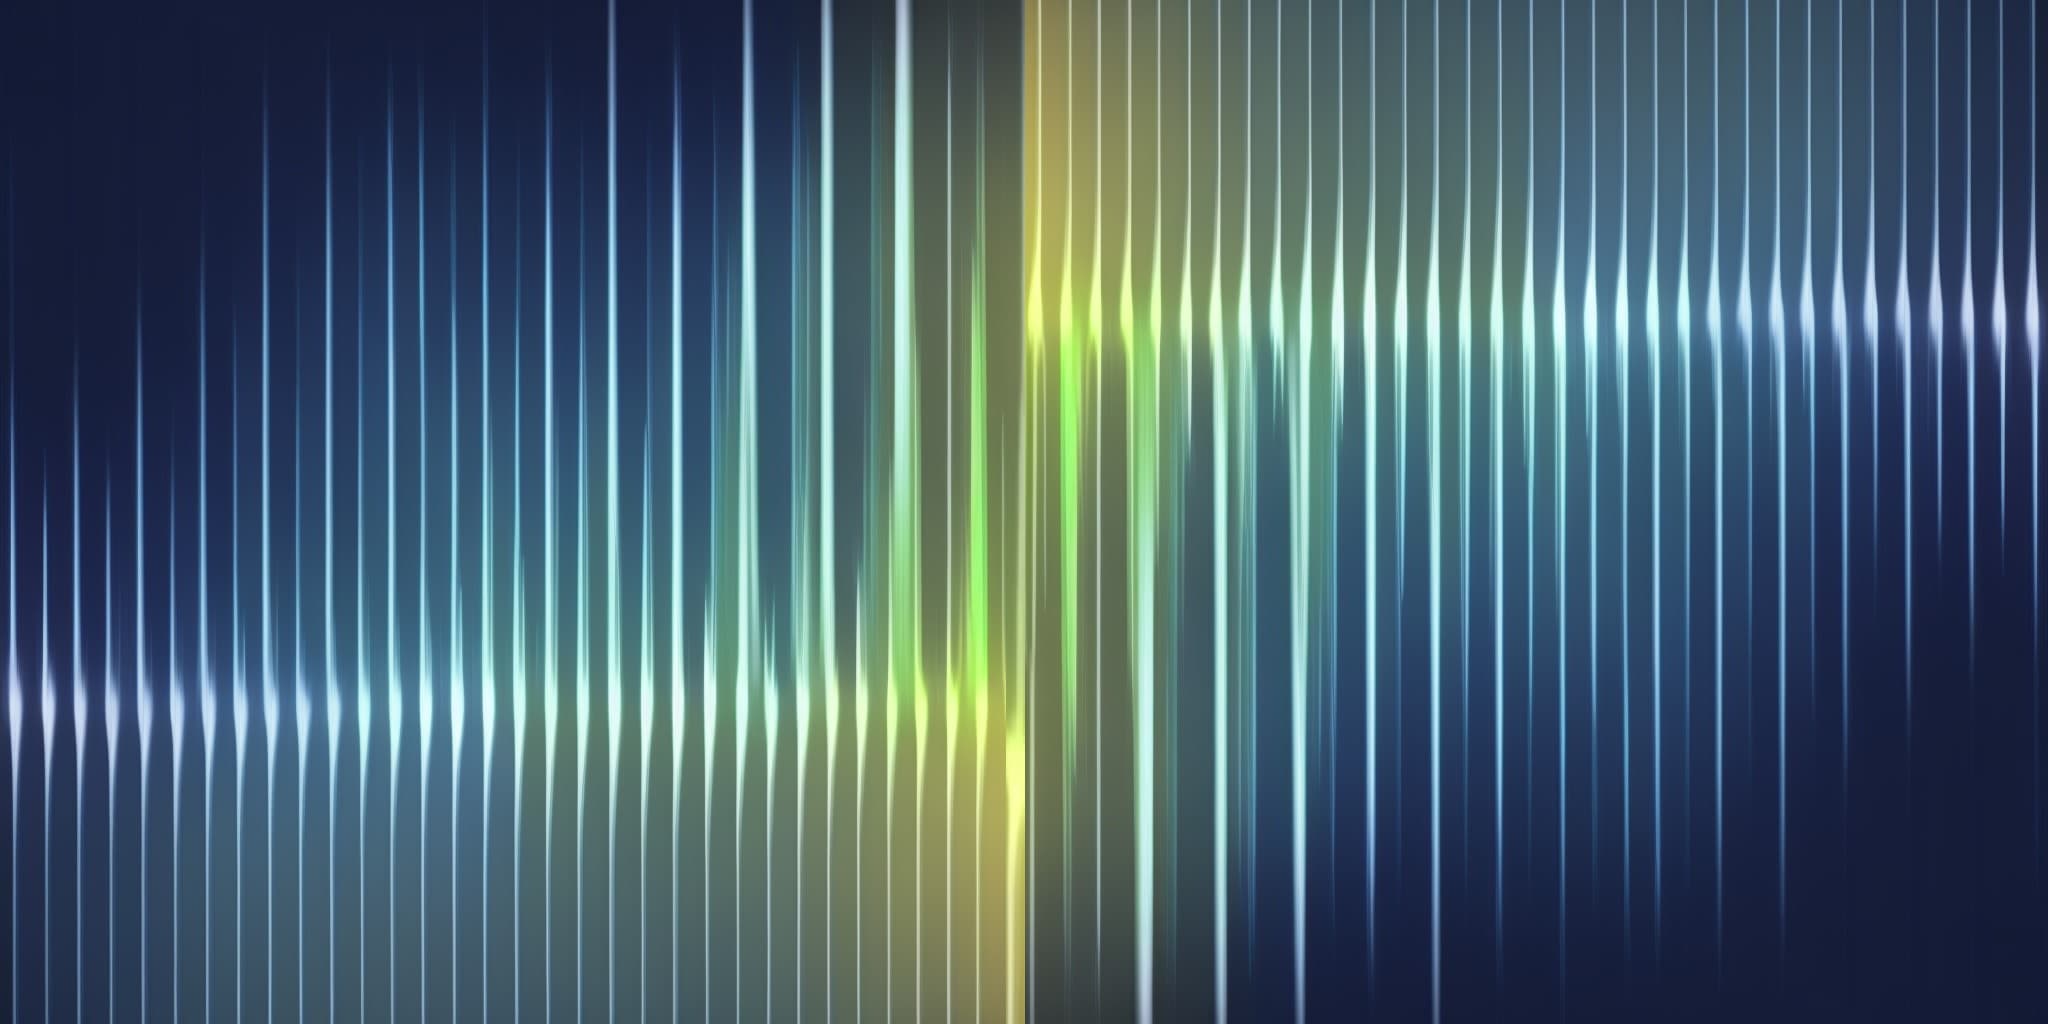 Python Sound Wave Analysis